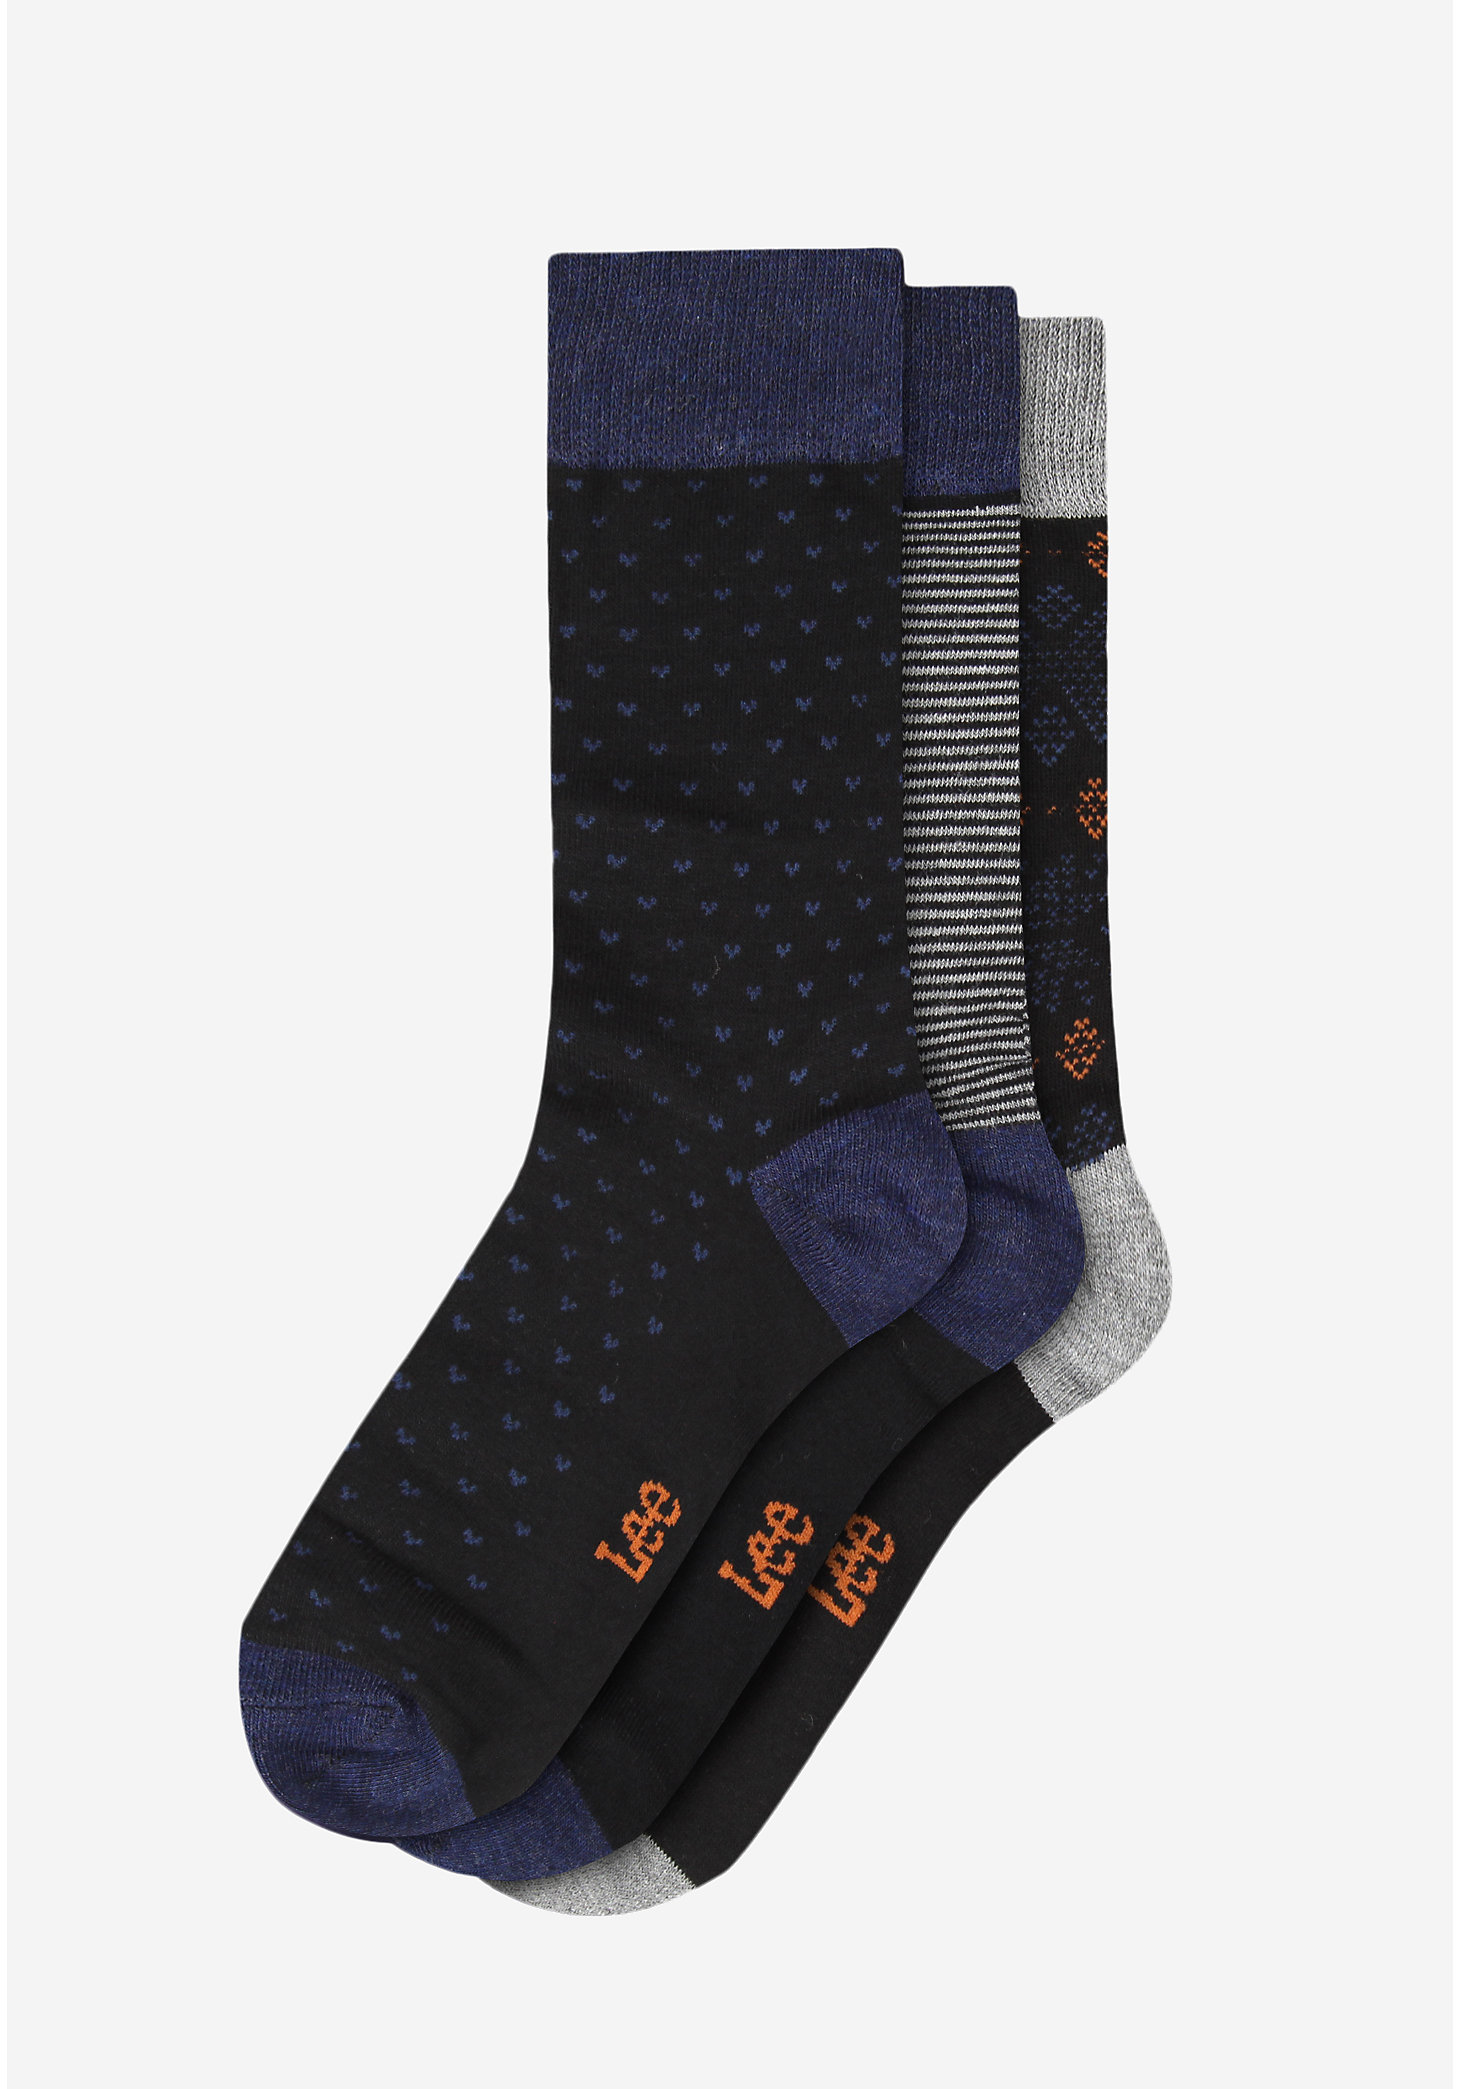 3-Pack Gift Socks in Marl, Fairisle & Royal Teal main view